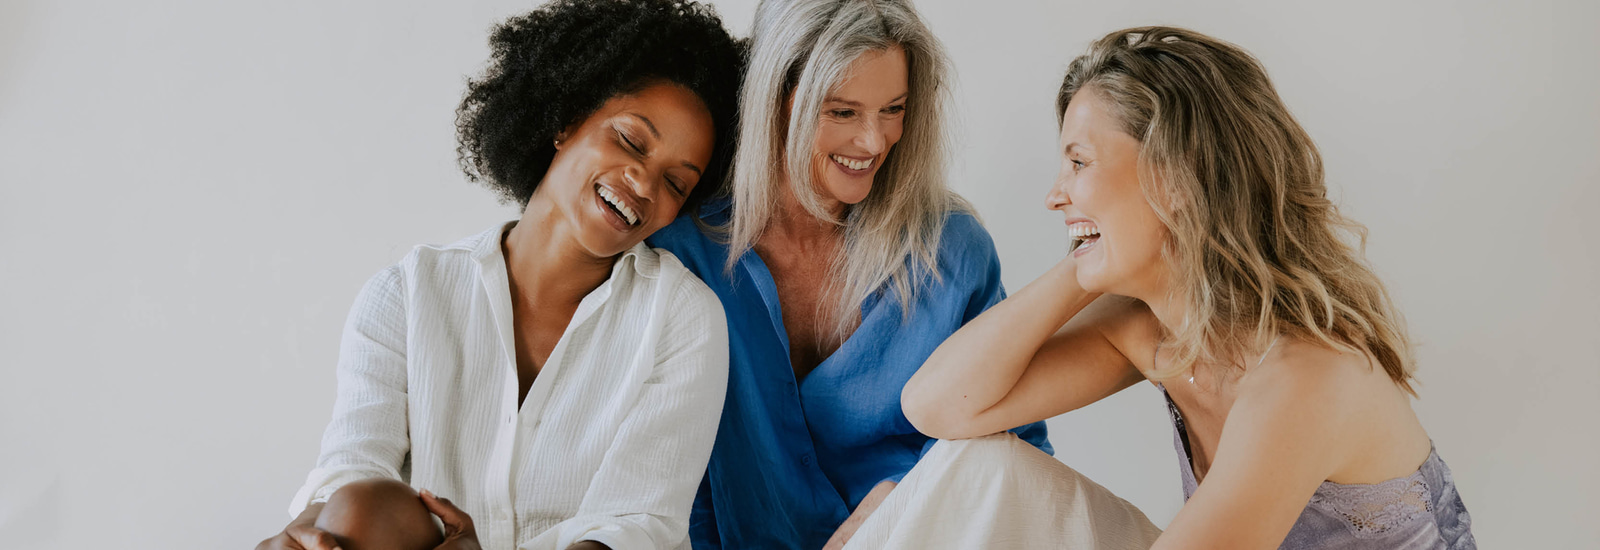 foto van drie lachende vrouwen